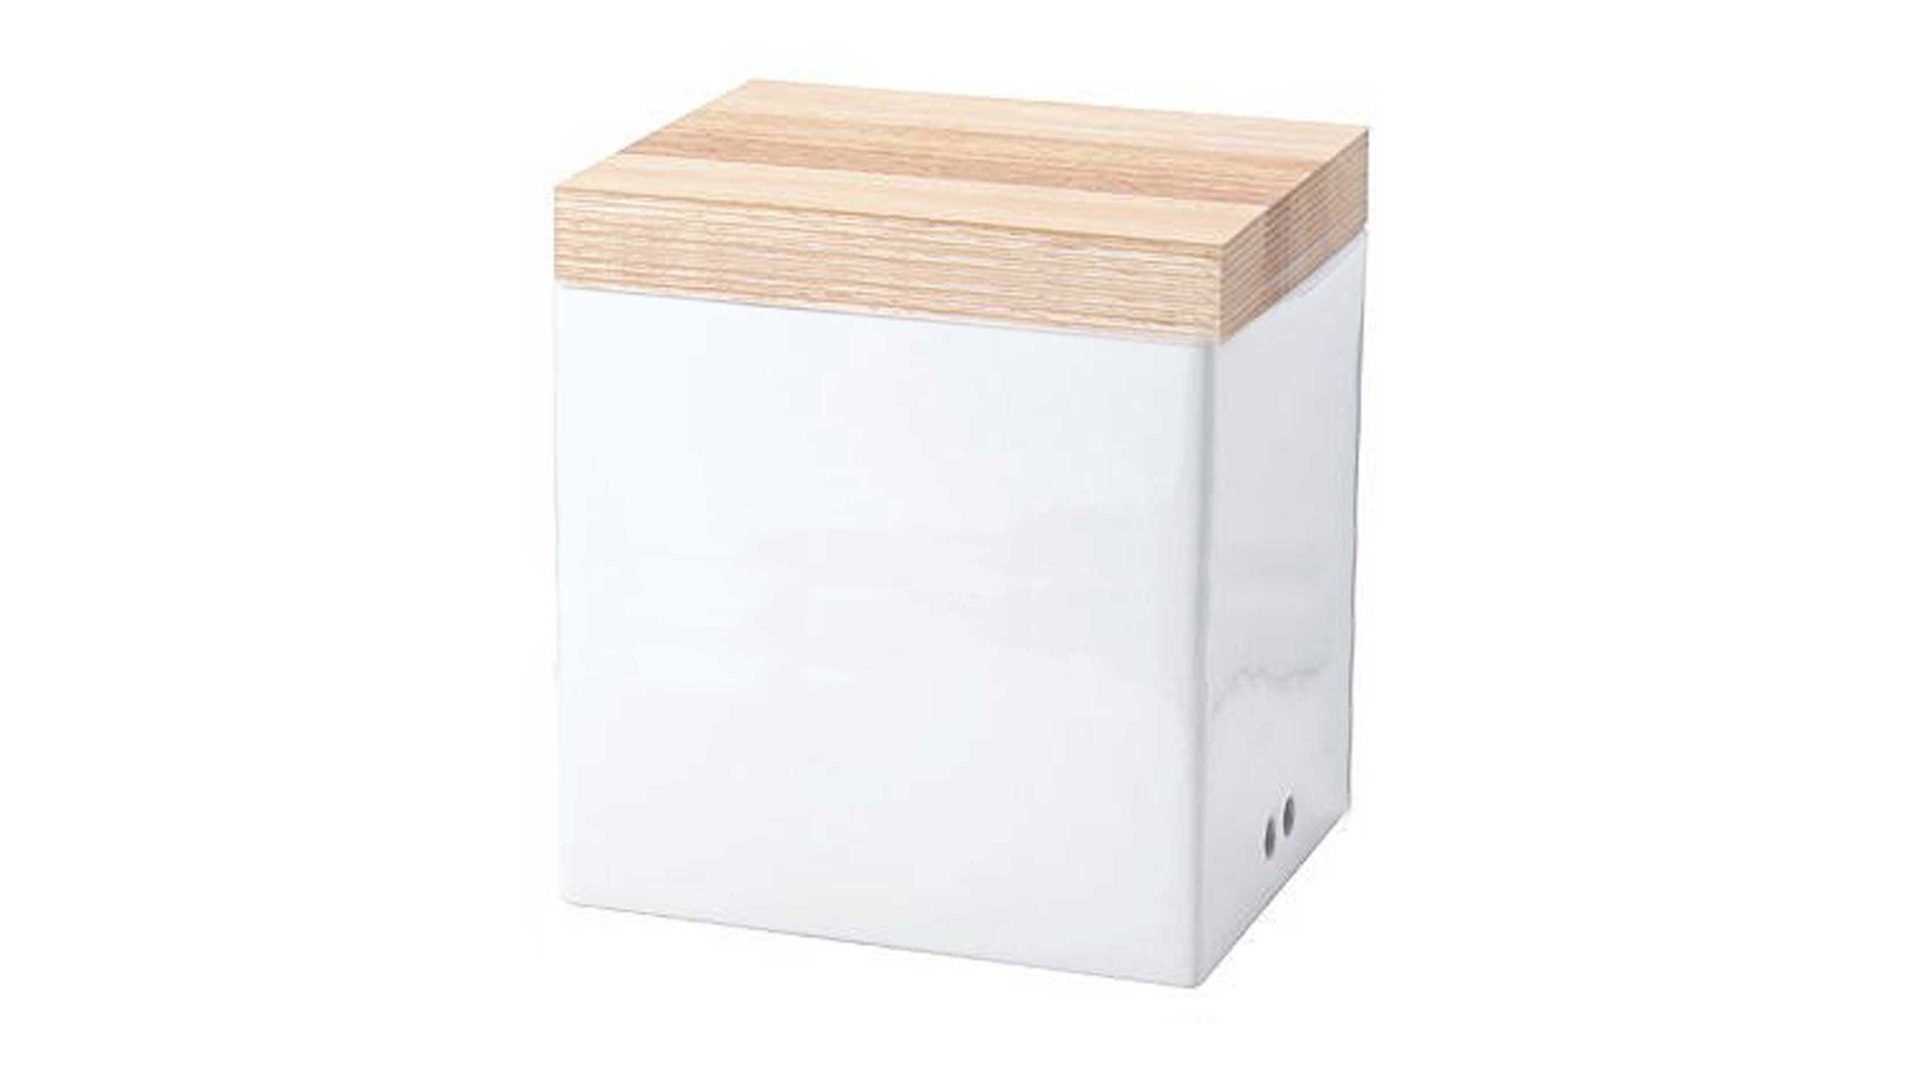 Dose Continenta aus Keramik in Weiß CONTINENTA Vorratsdose weiße Keramik & Holz – ca. 14 x 16 x 12 cm